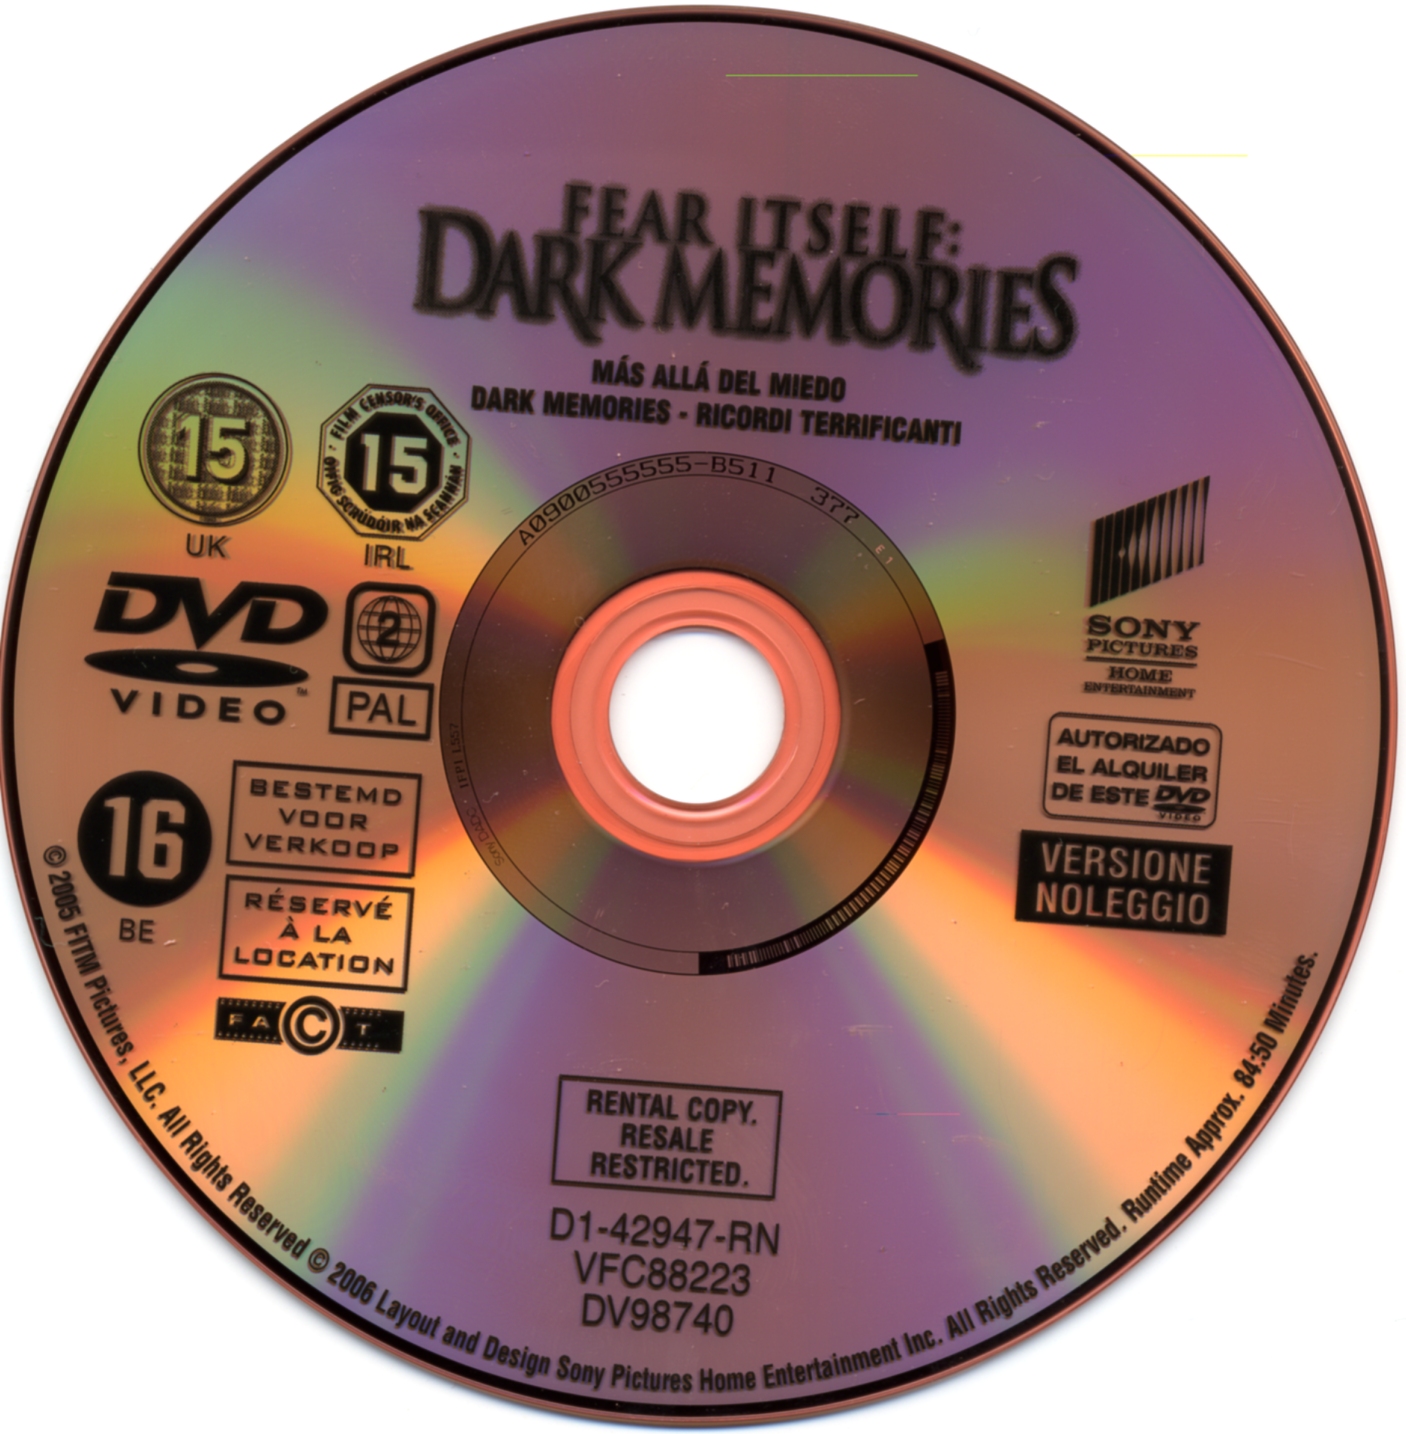 Dark memories